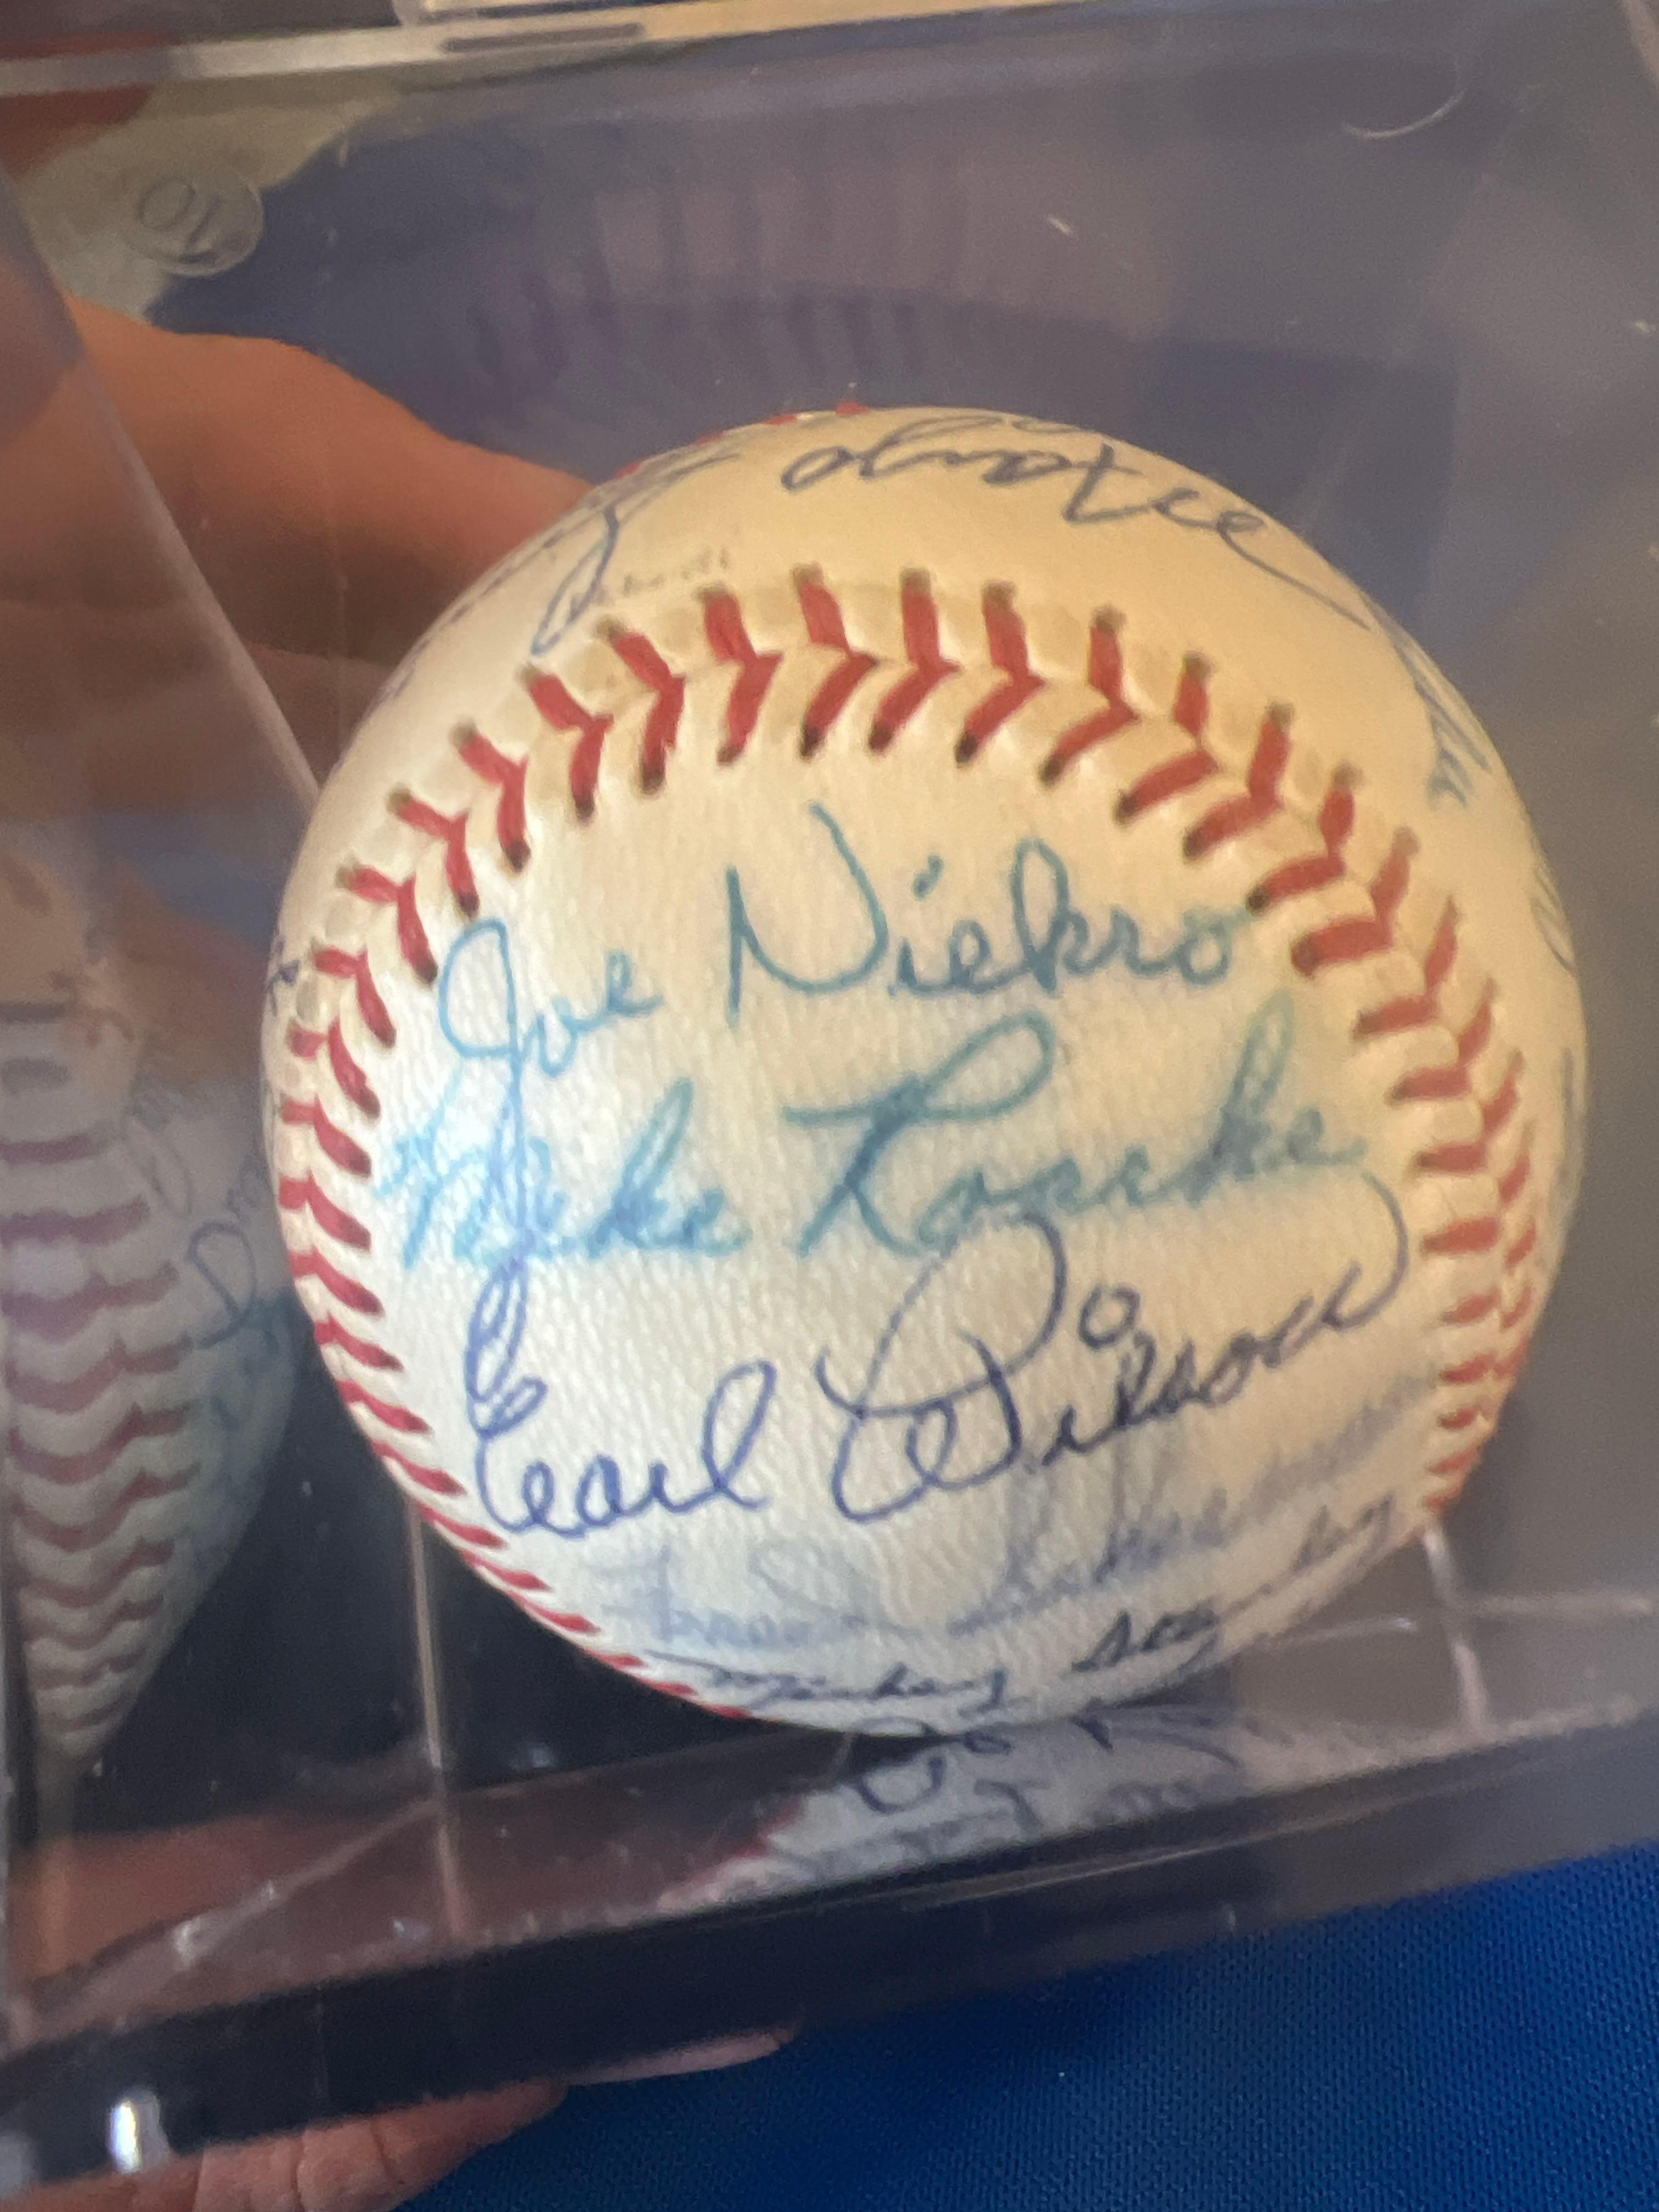 Detroit Tigers 1-26-71 Autographed Baseball